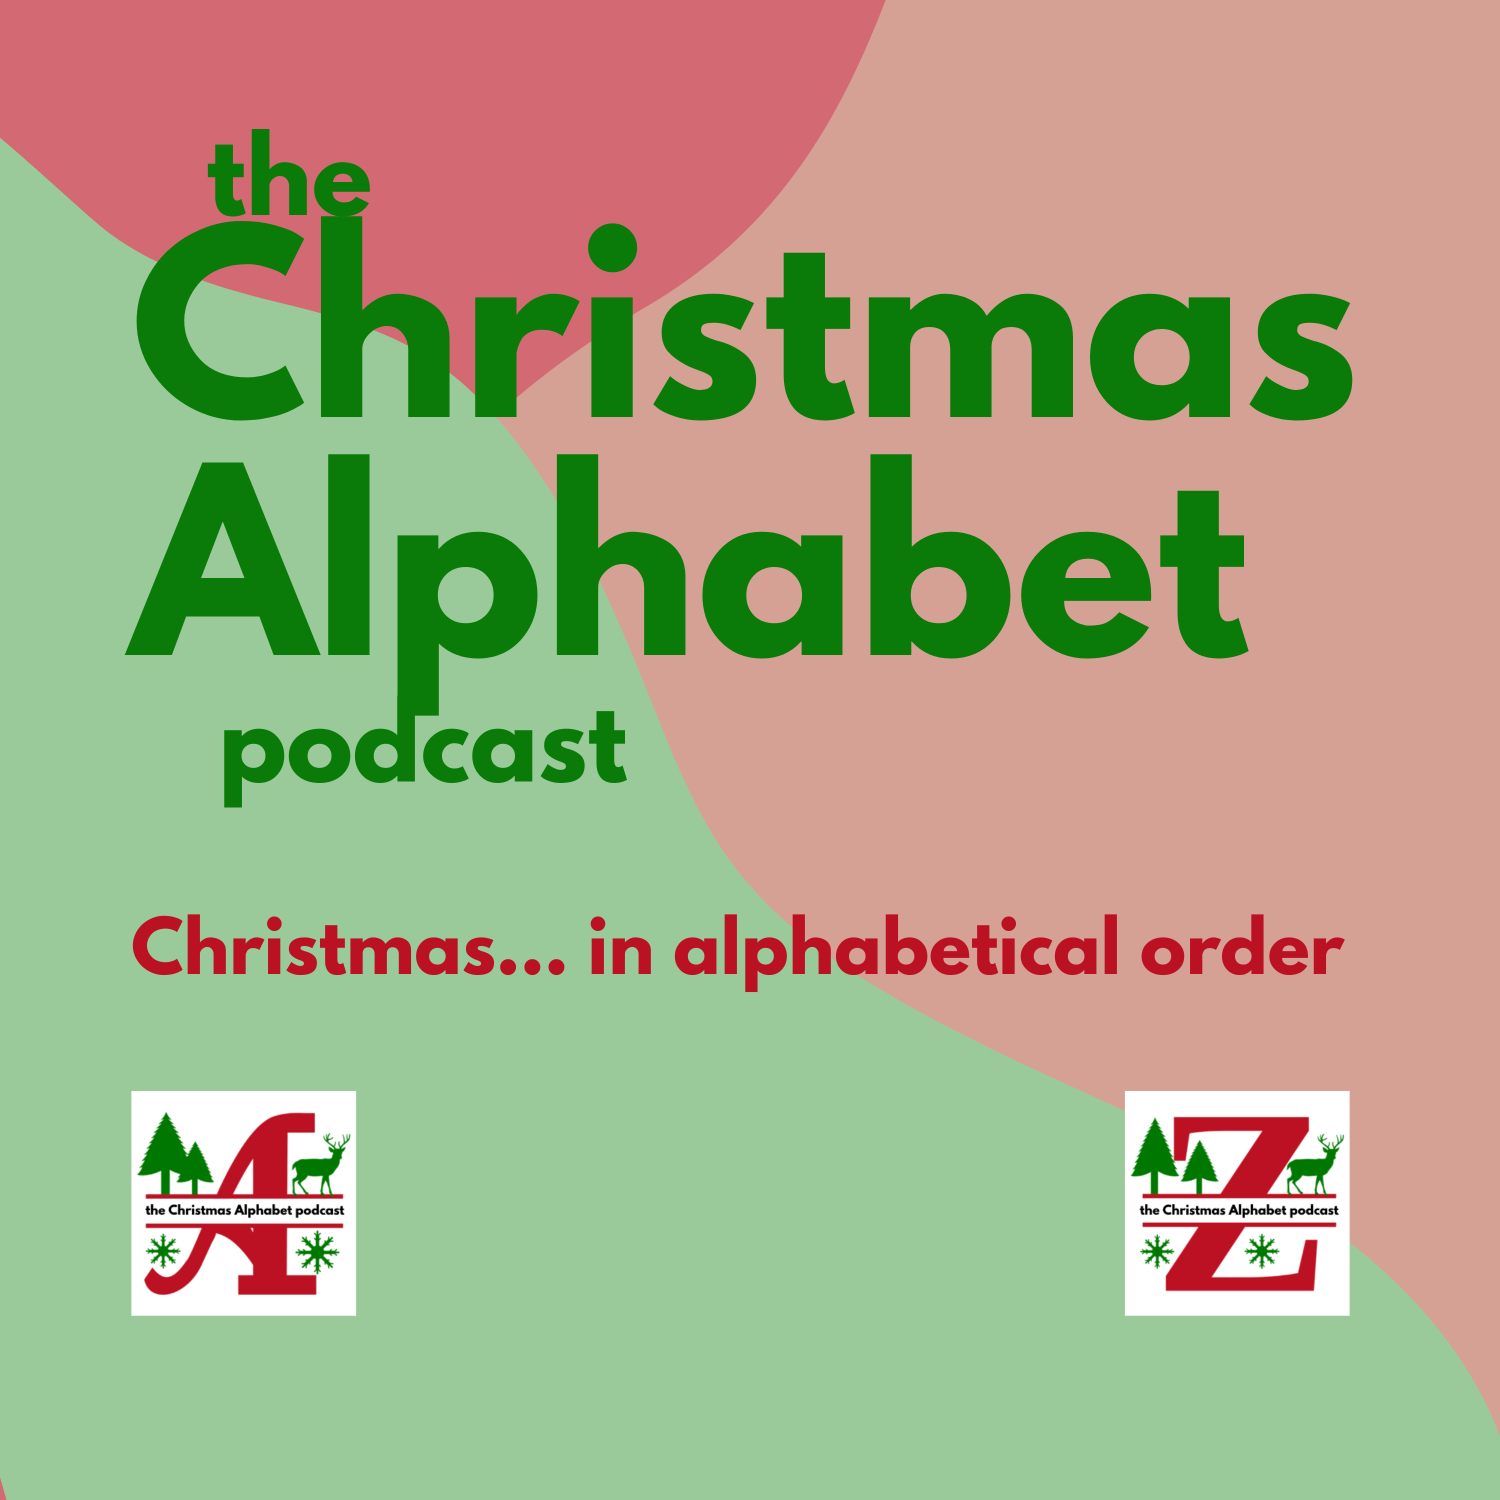 The Christmas Alphabet Podcast